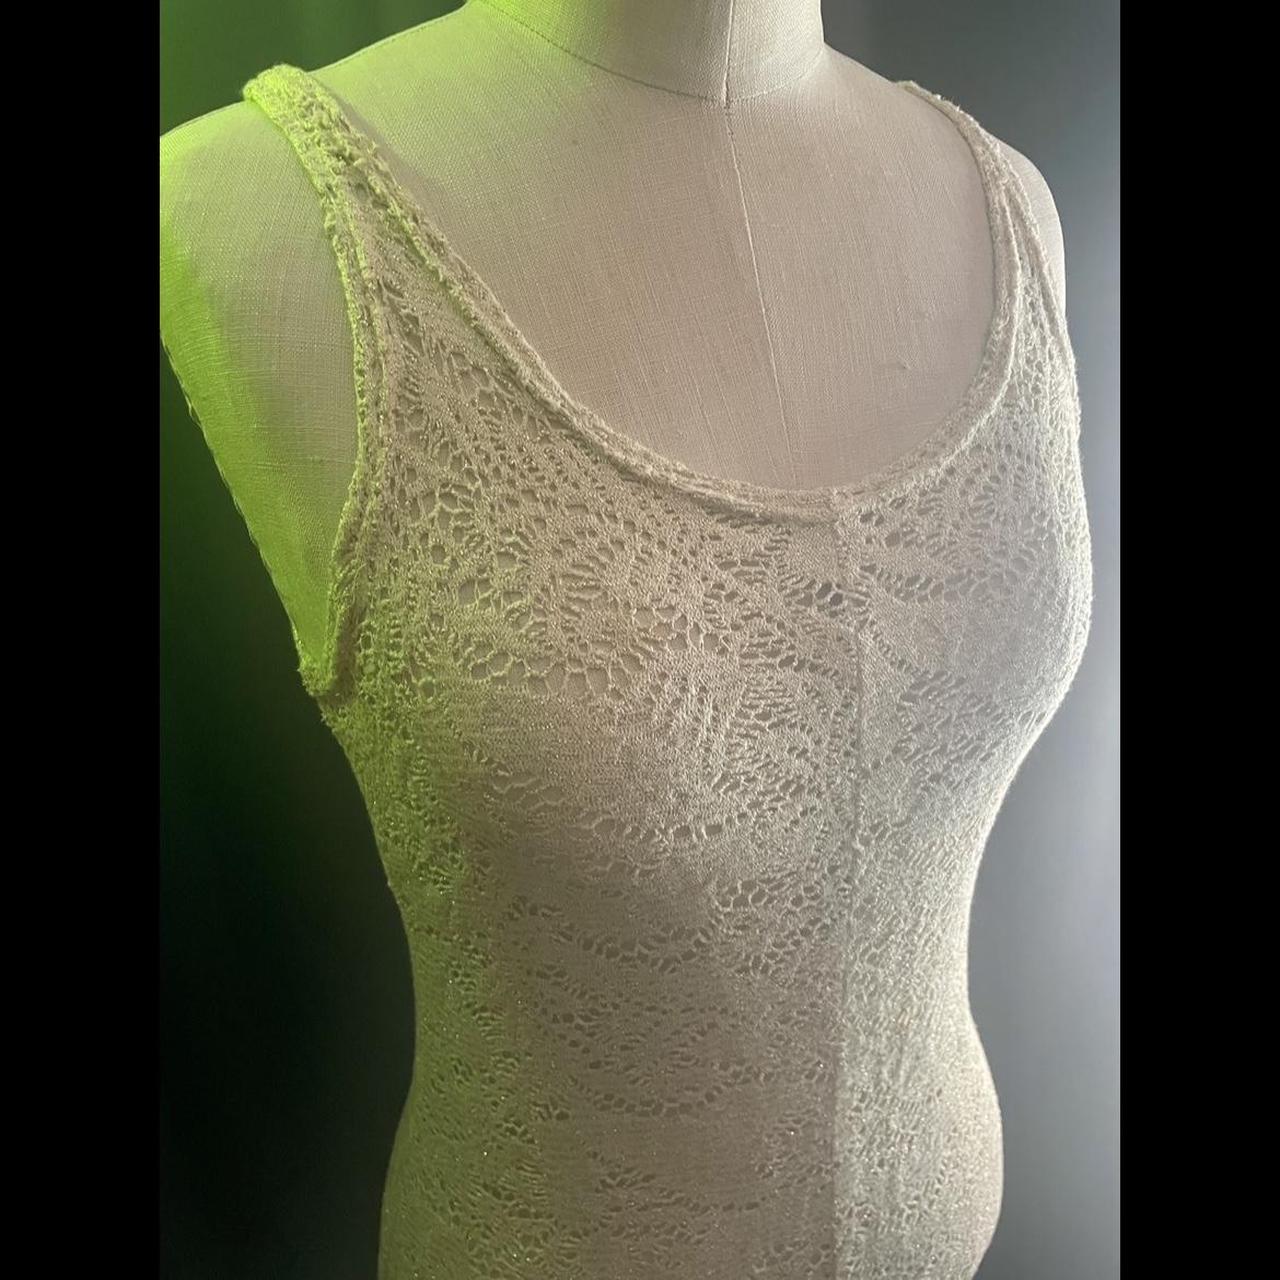 cream lace 90s bodysuit 🤍 in great condition, super - Depop